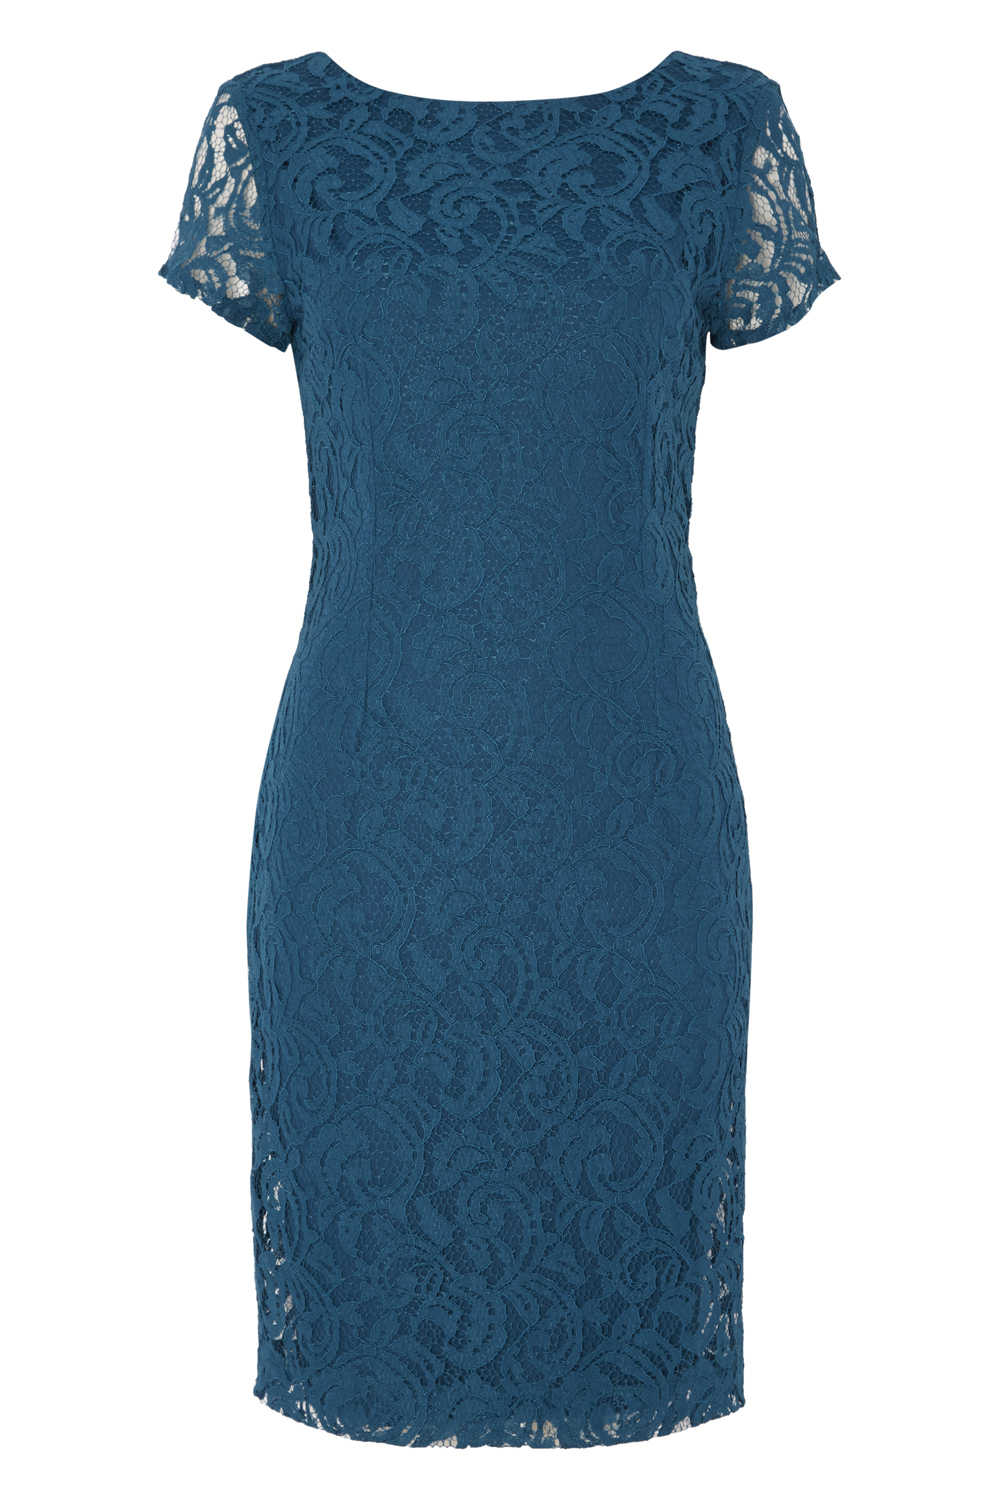 Short Sleeve Luxe Lace Dress in Teal - Roman Originals UK